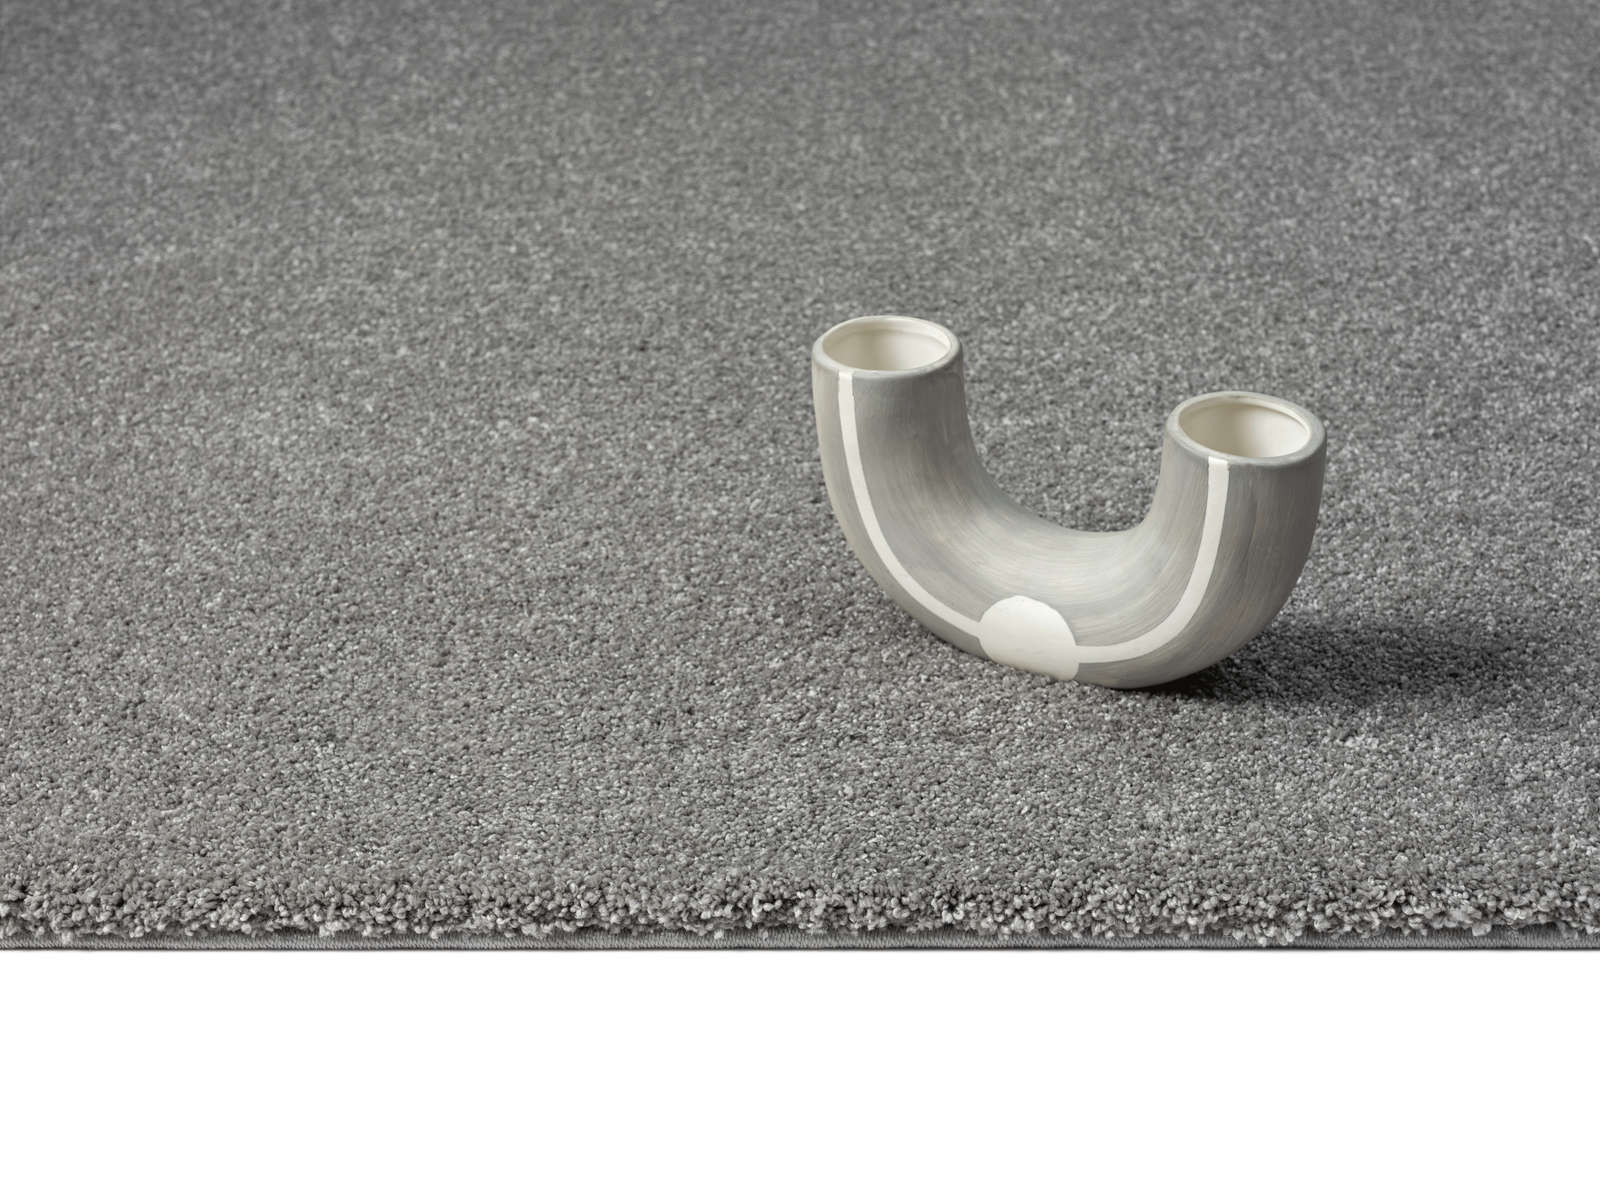             Fluffy short pile carpet in grey - 150 x 80 cm
        